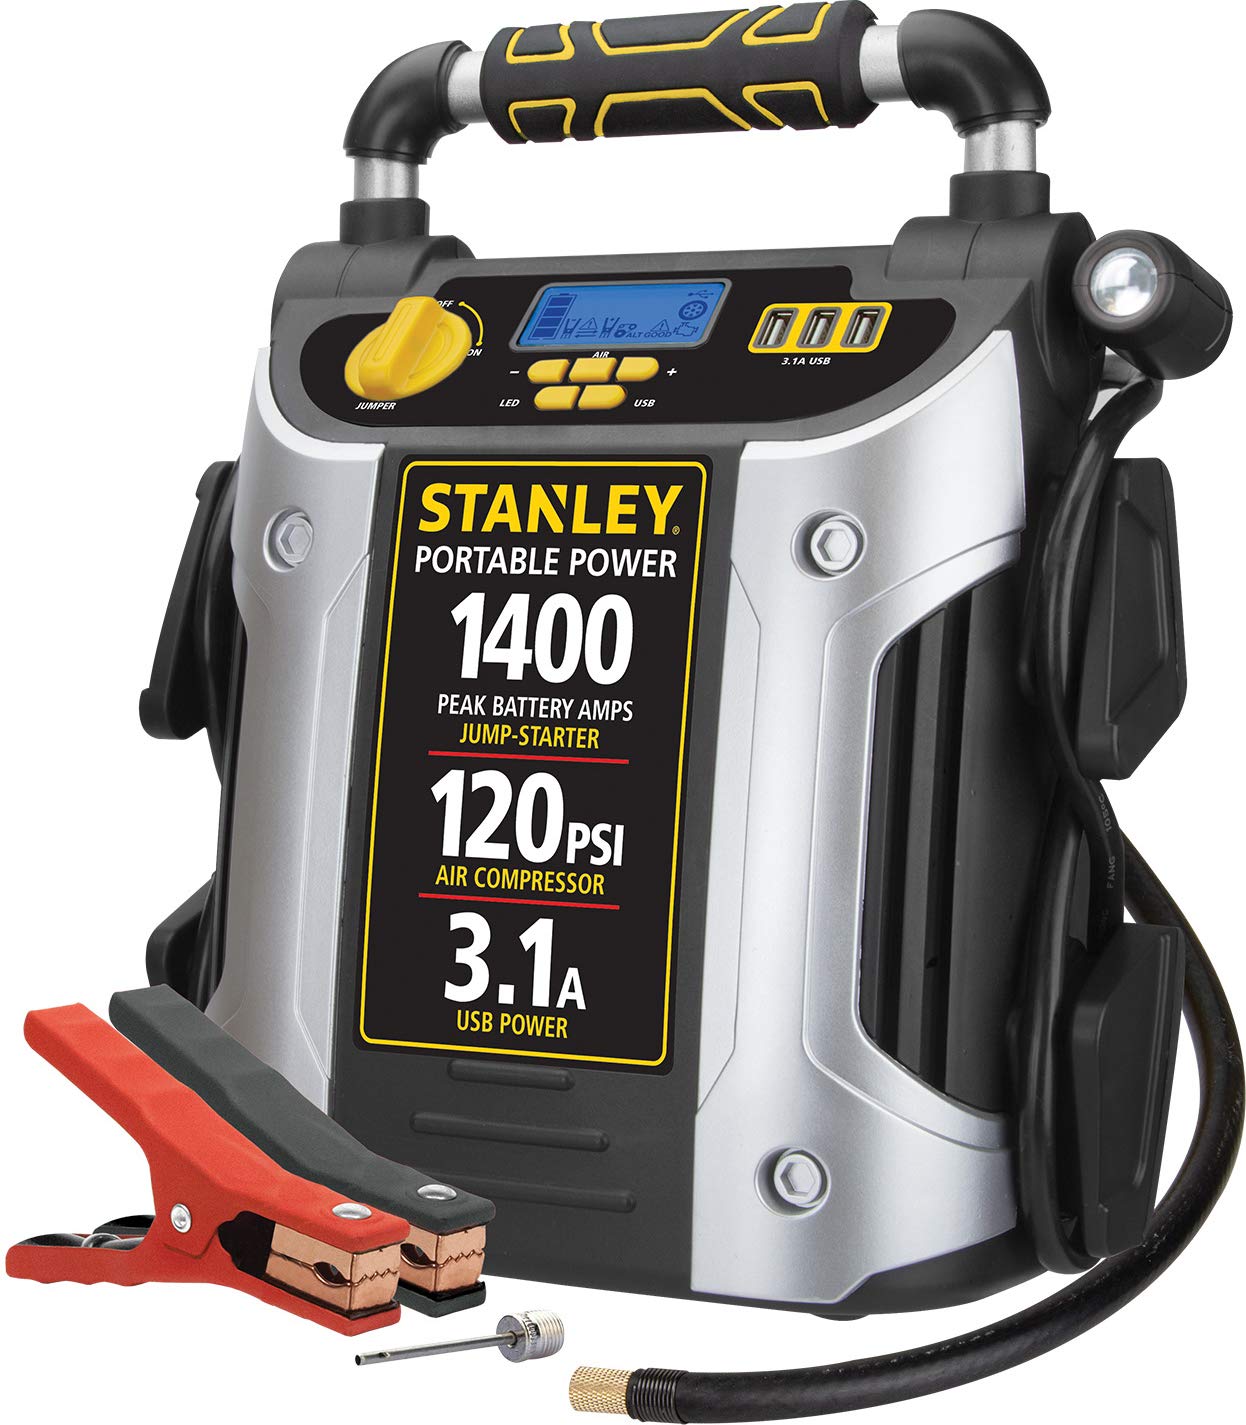 Stanley 1400 Peak Amp Automotive Jump Starter, Portable Power – Triple 15W USB Ports, 120 PSI Air Compressor